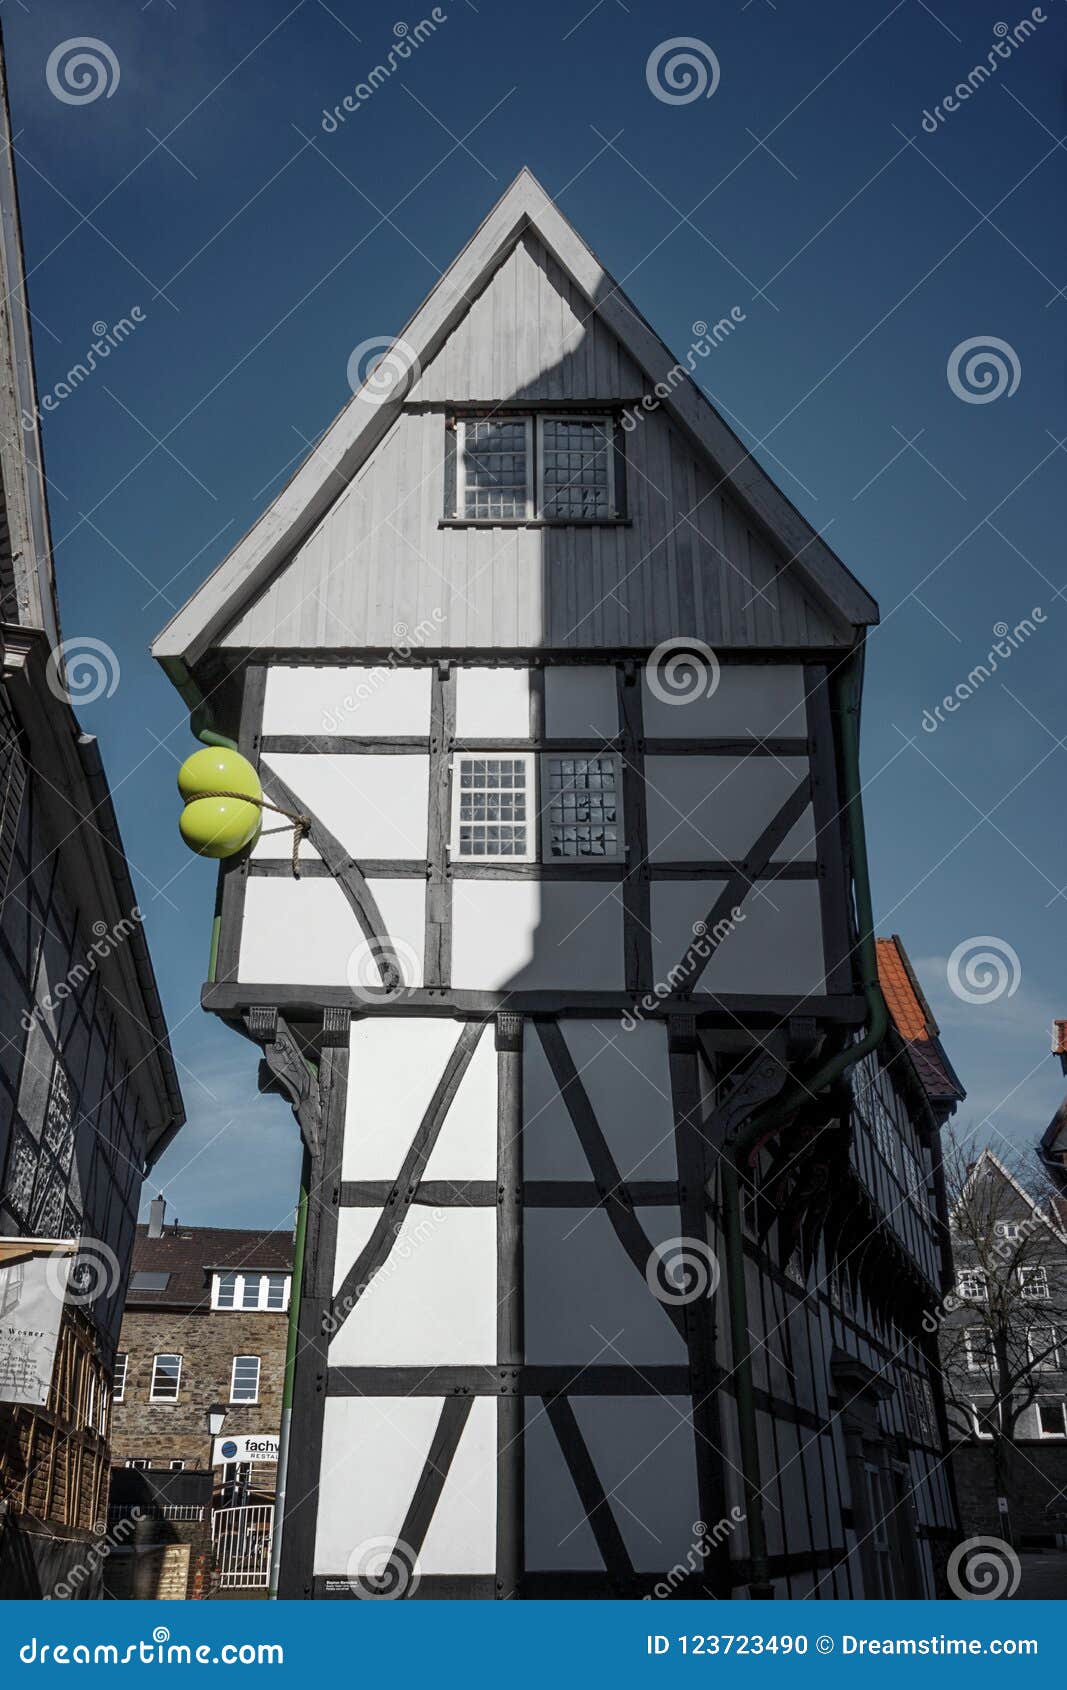 framehouse in germany / hattingen